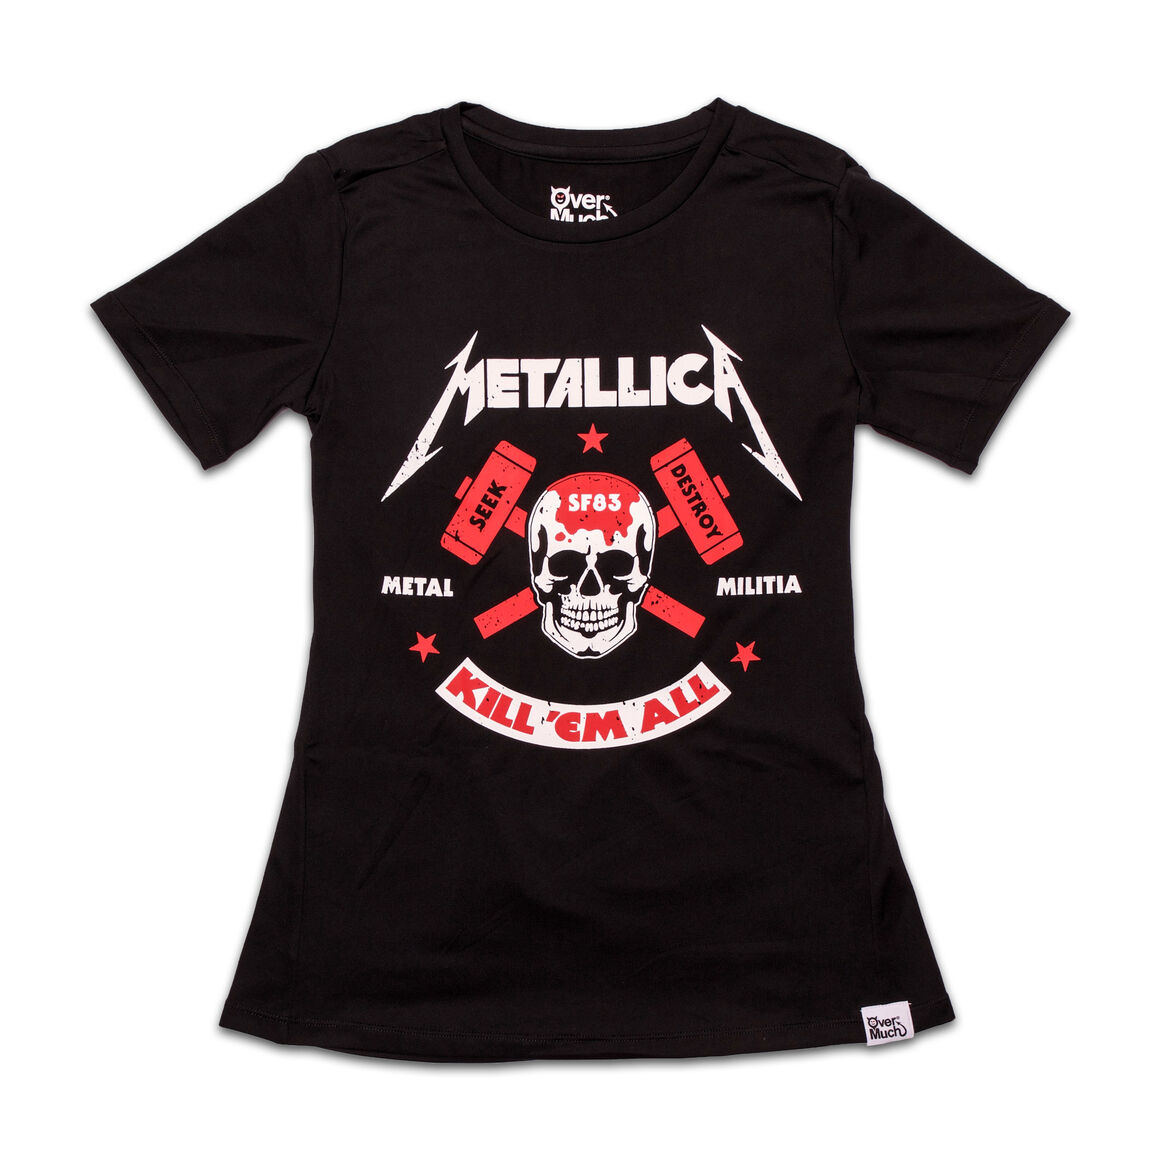 Women's OverMuch x Metallica Metal Militia Skull Hammer T-Shirt, , hi-res